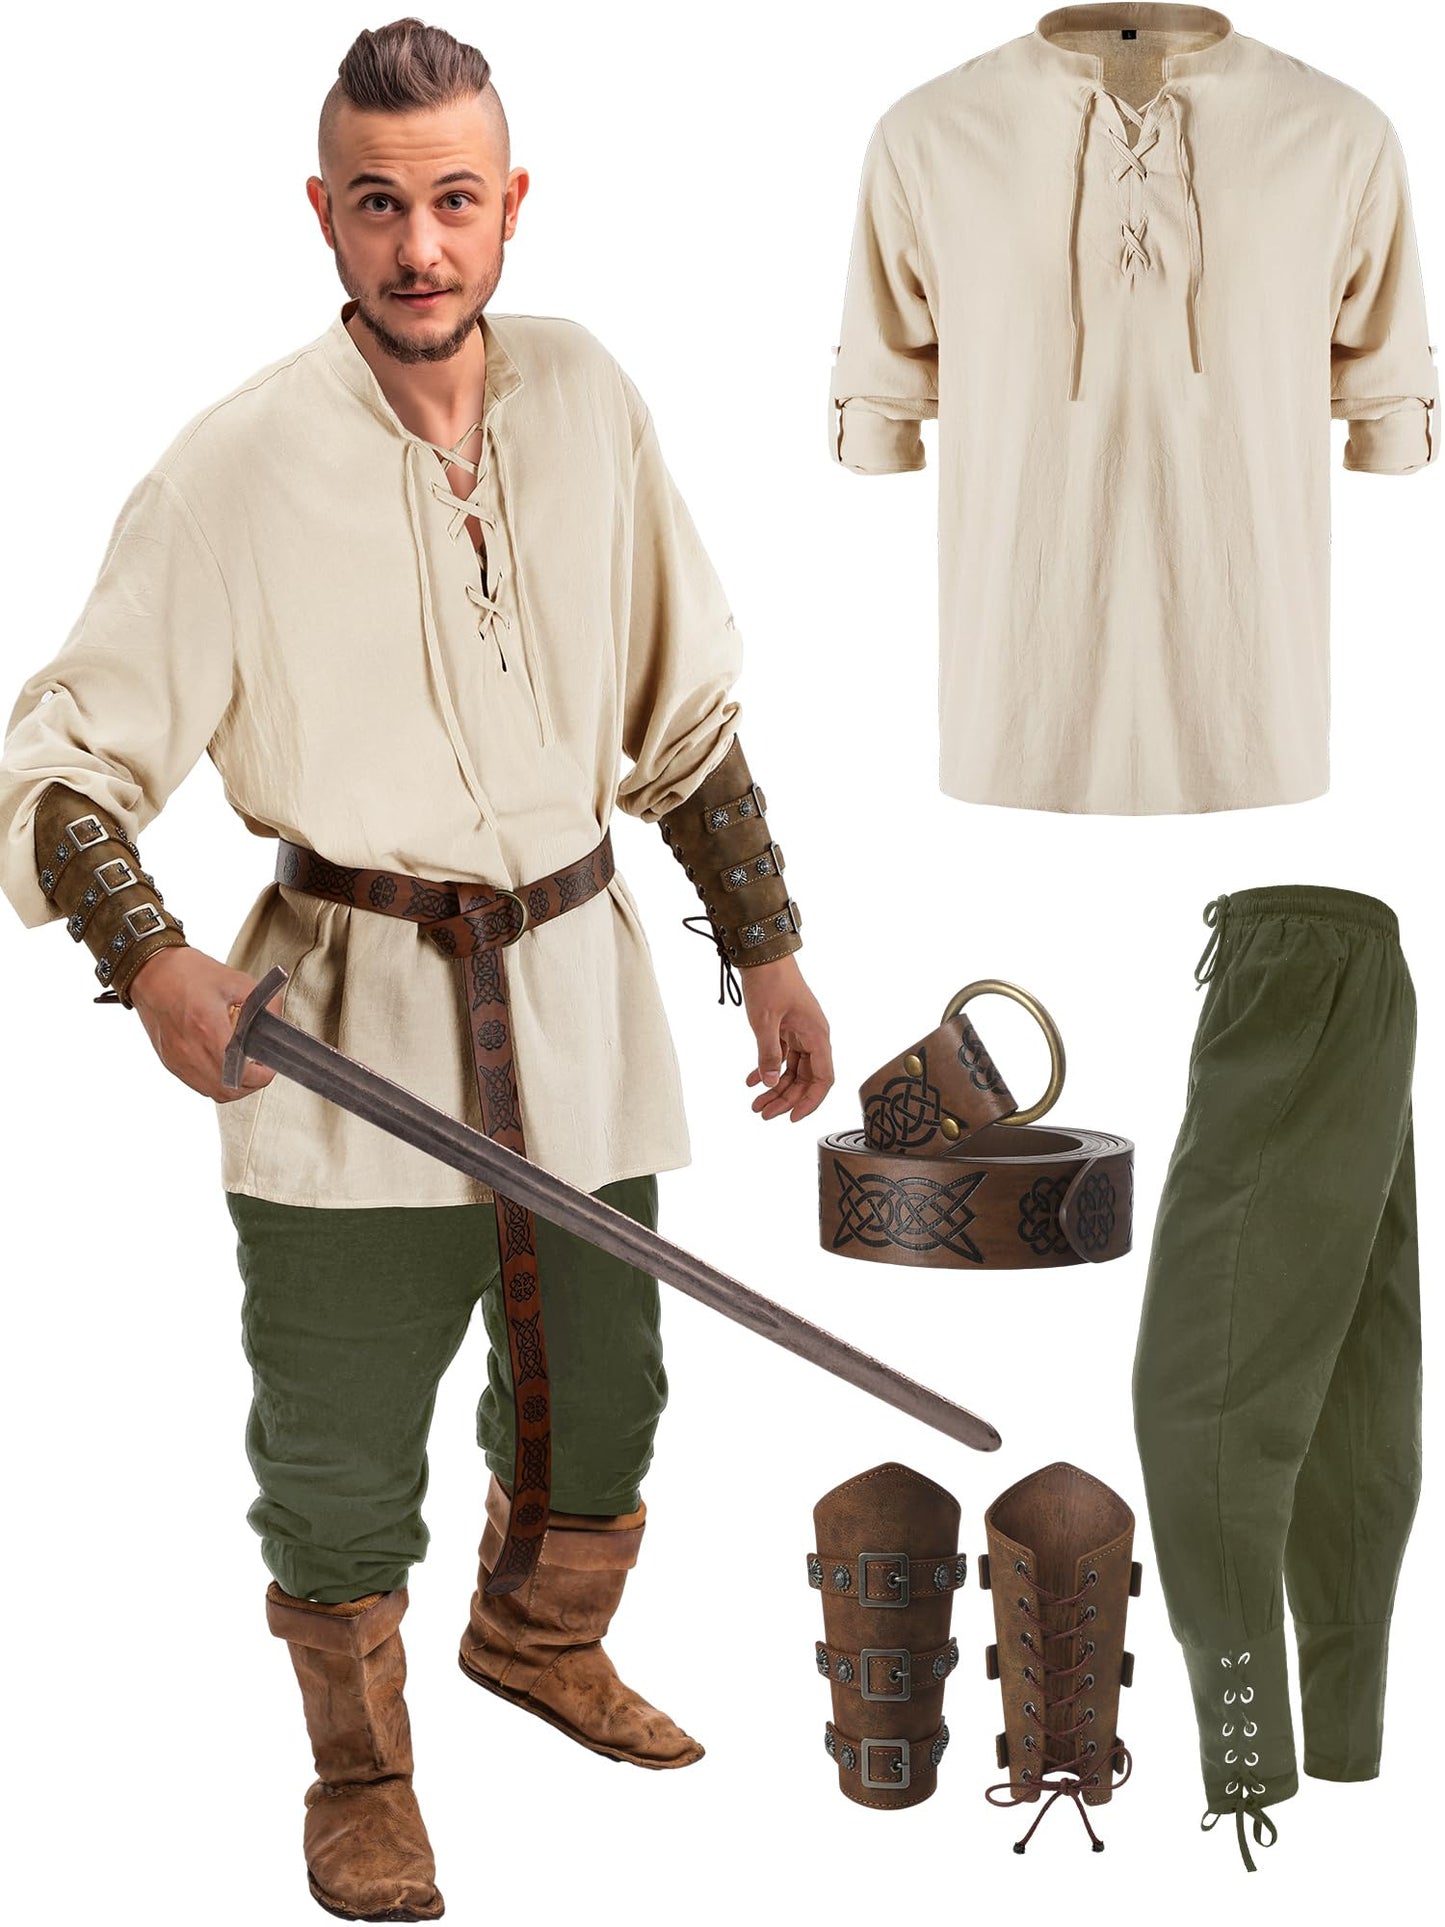 Jiuguva 4 Pcs Halloween Men's Renaissance Costume Set Medieval Pirate Shirt Ankle Banded Pants Viking Belt Accessories Stylish Color Medium